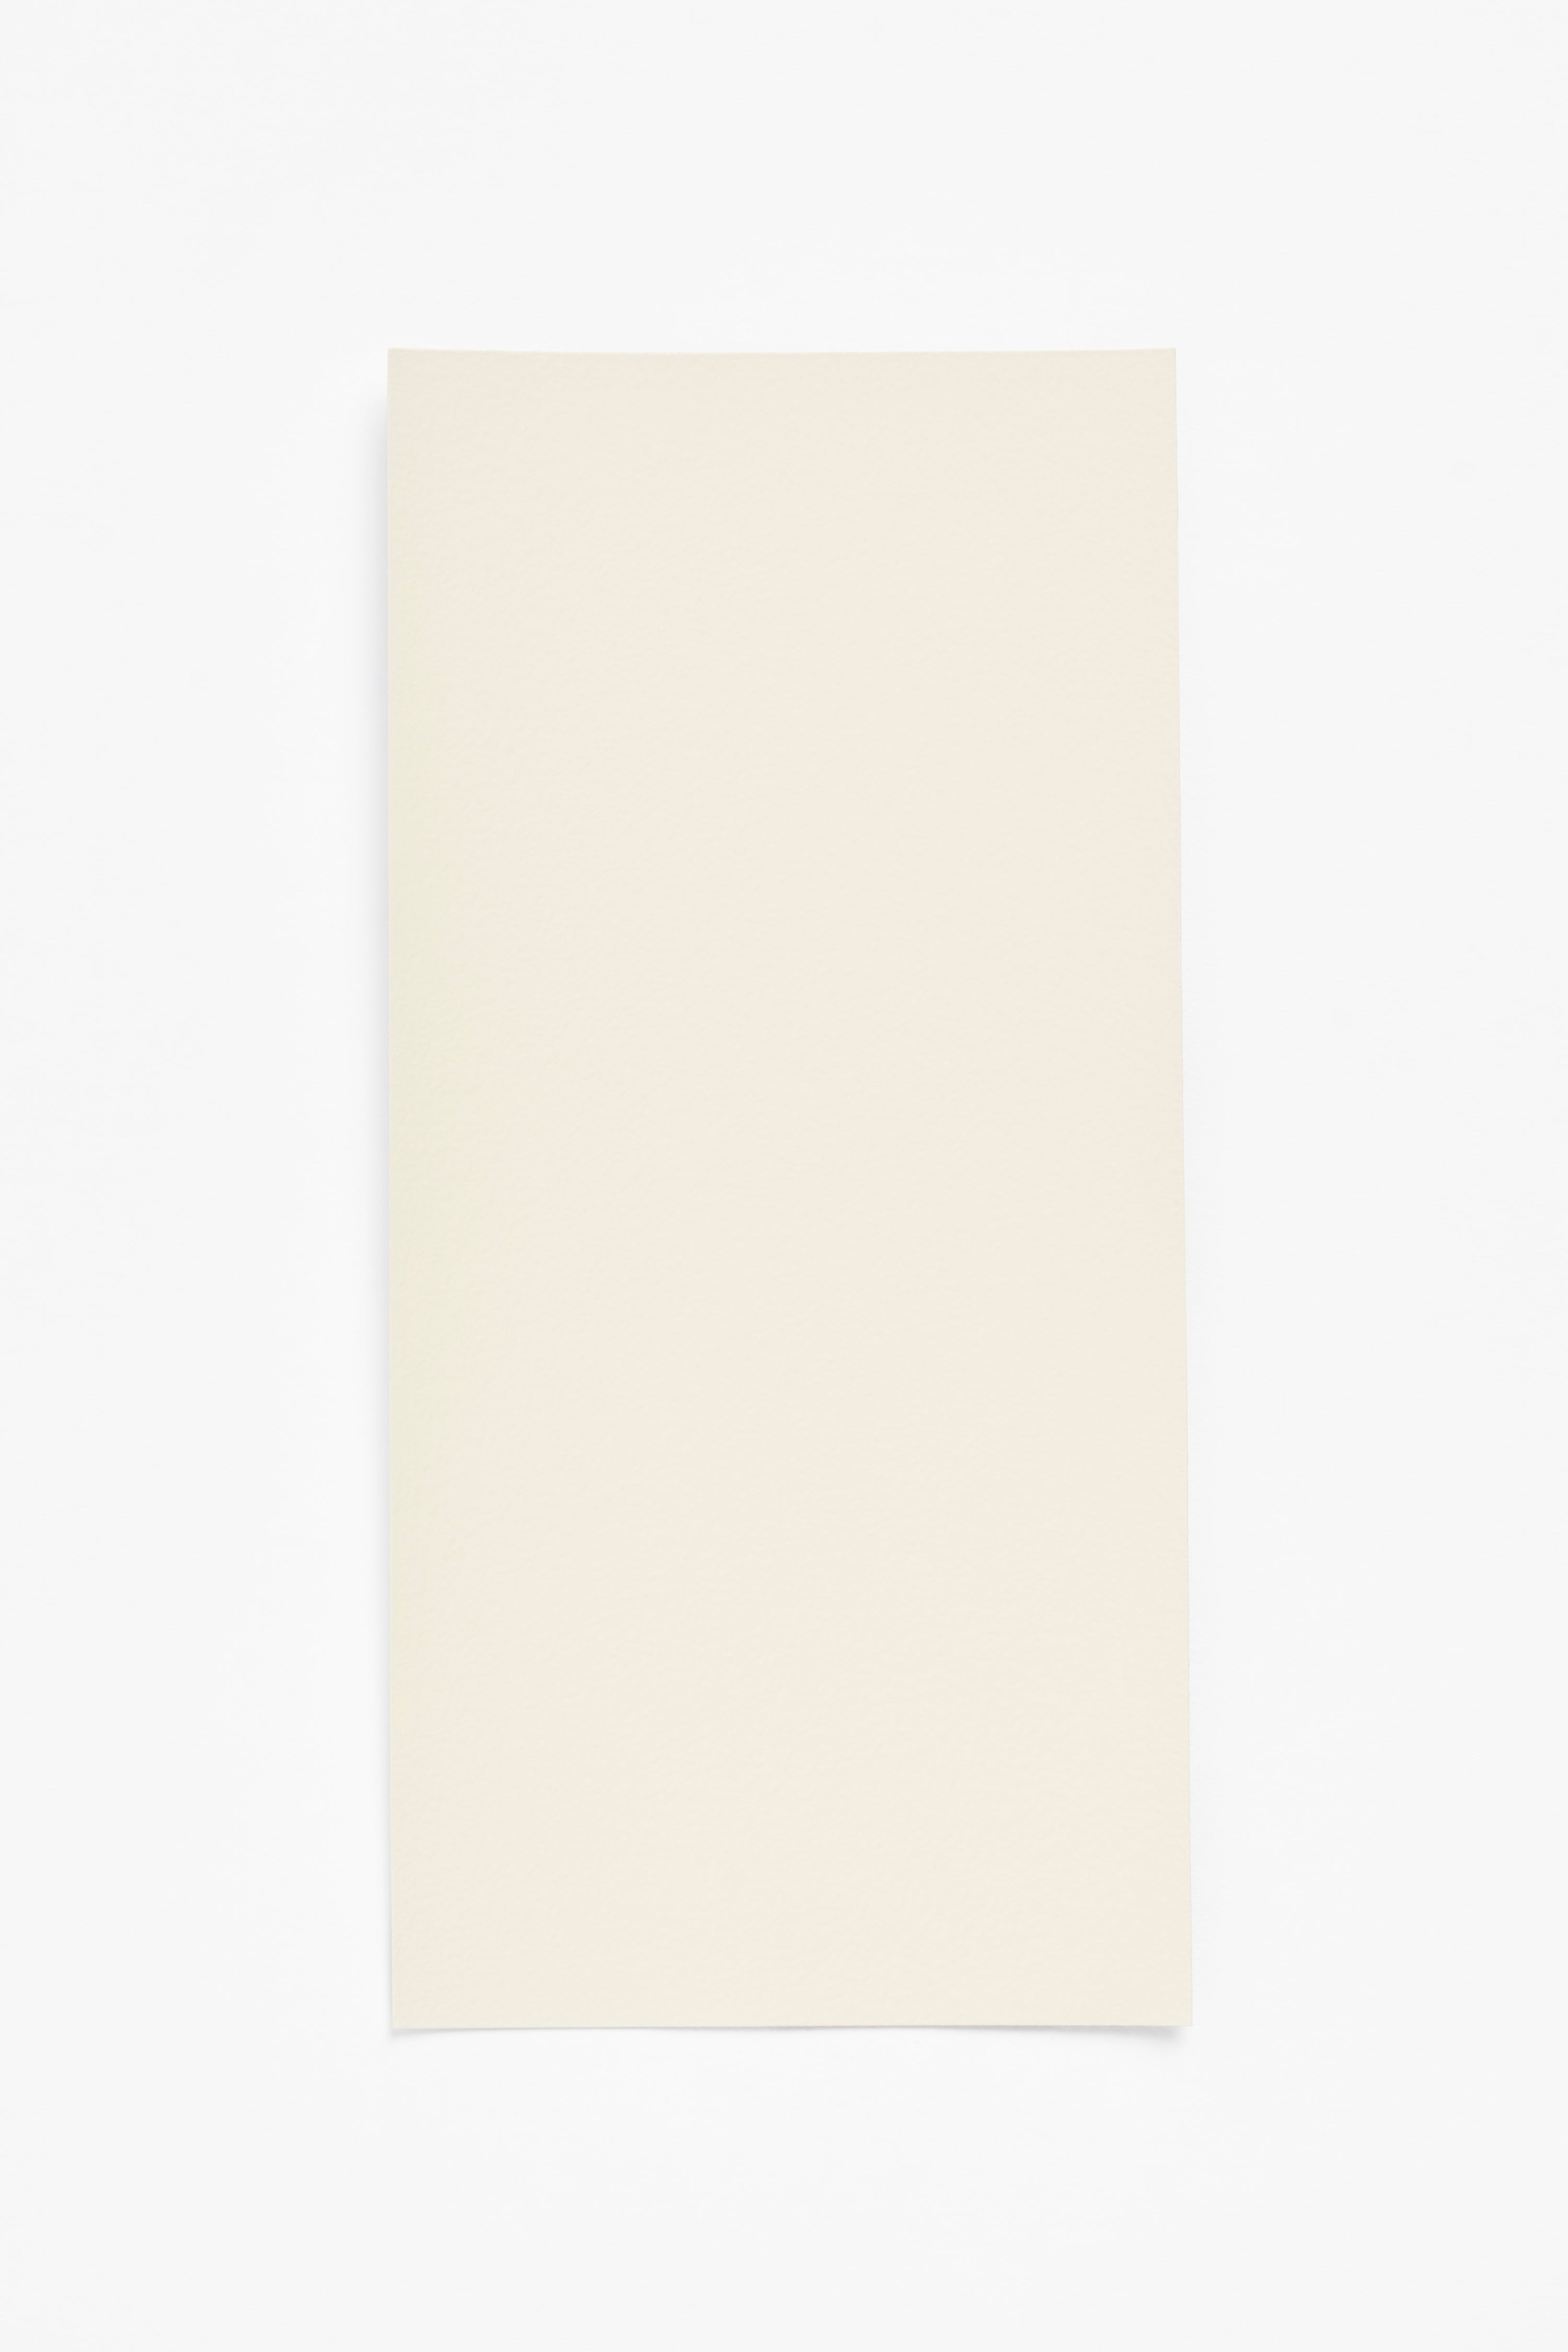 Pale — a paint colour developed by Halleroed for Blēo